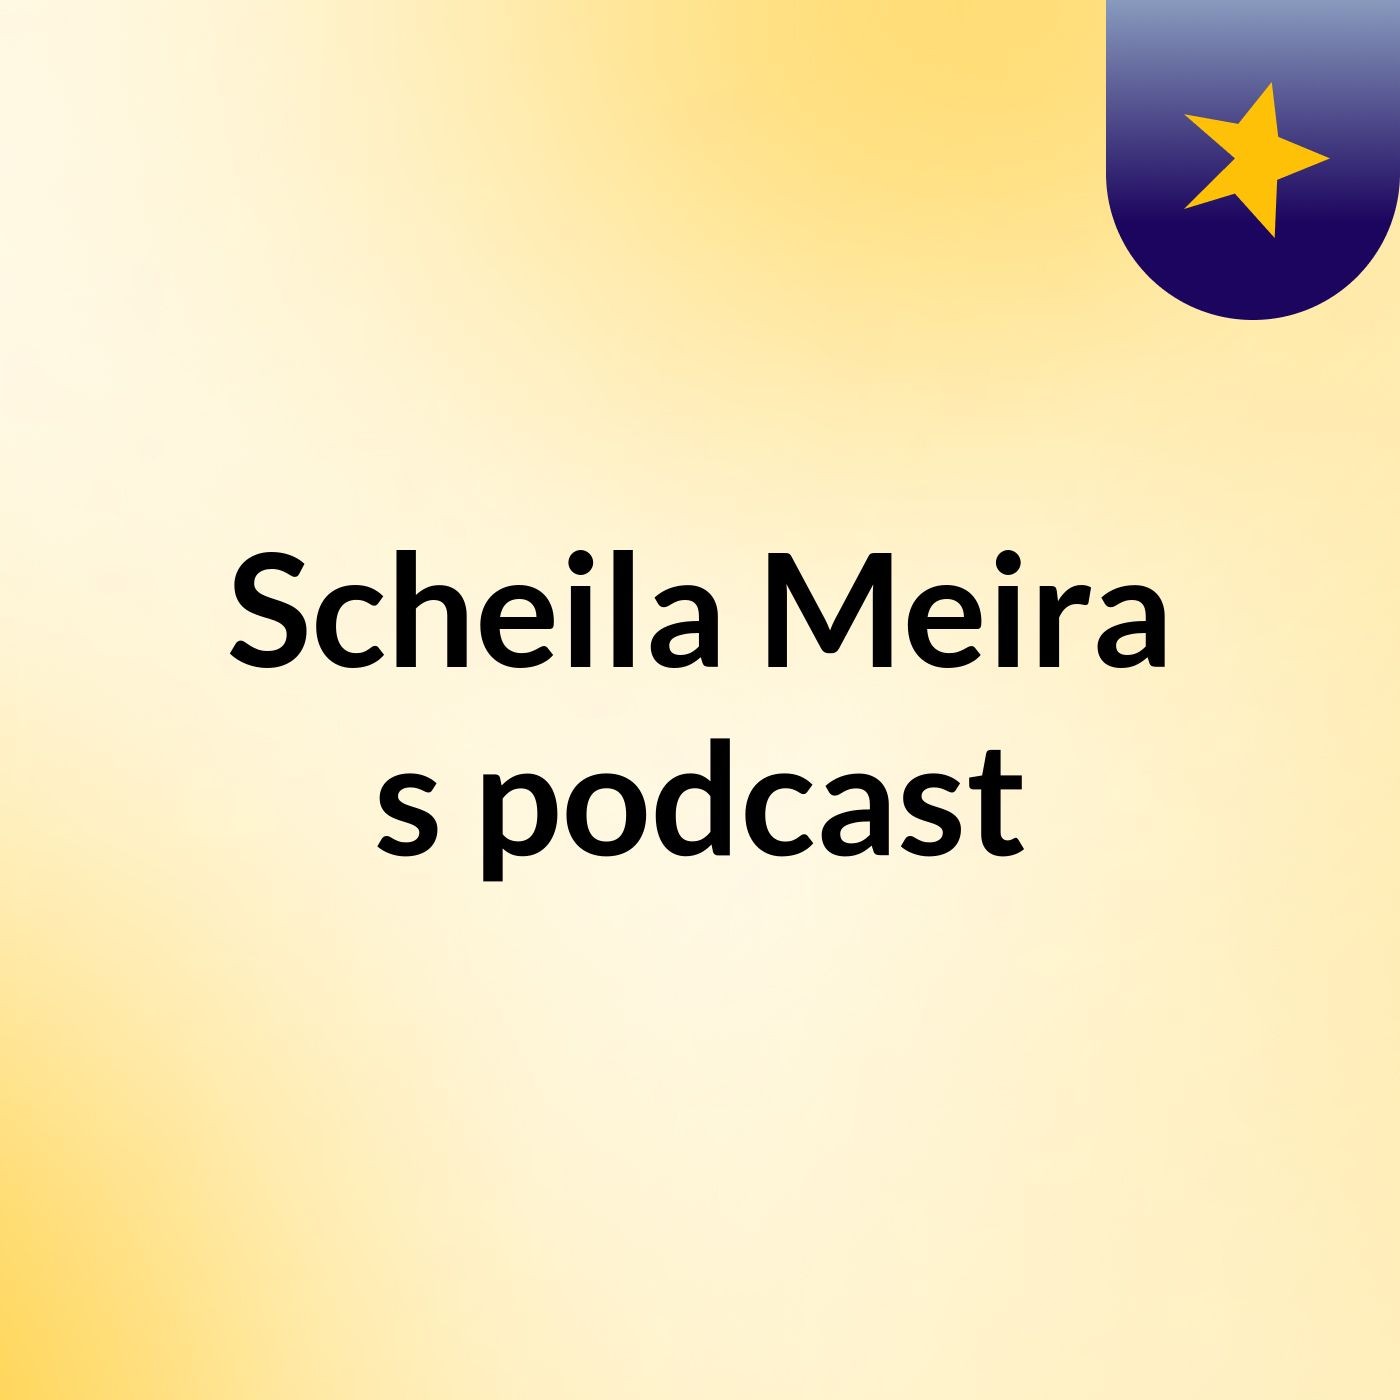 Scheila Meira's podcast